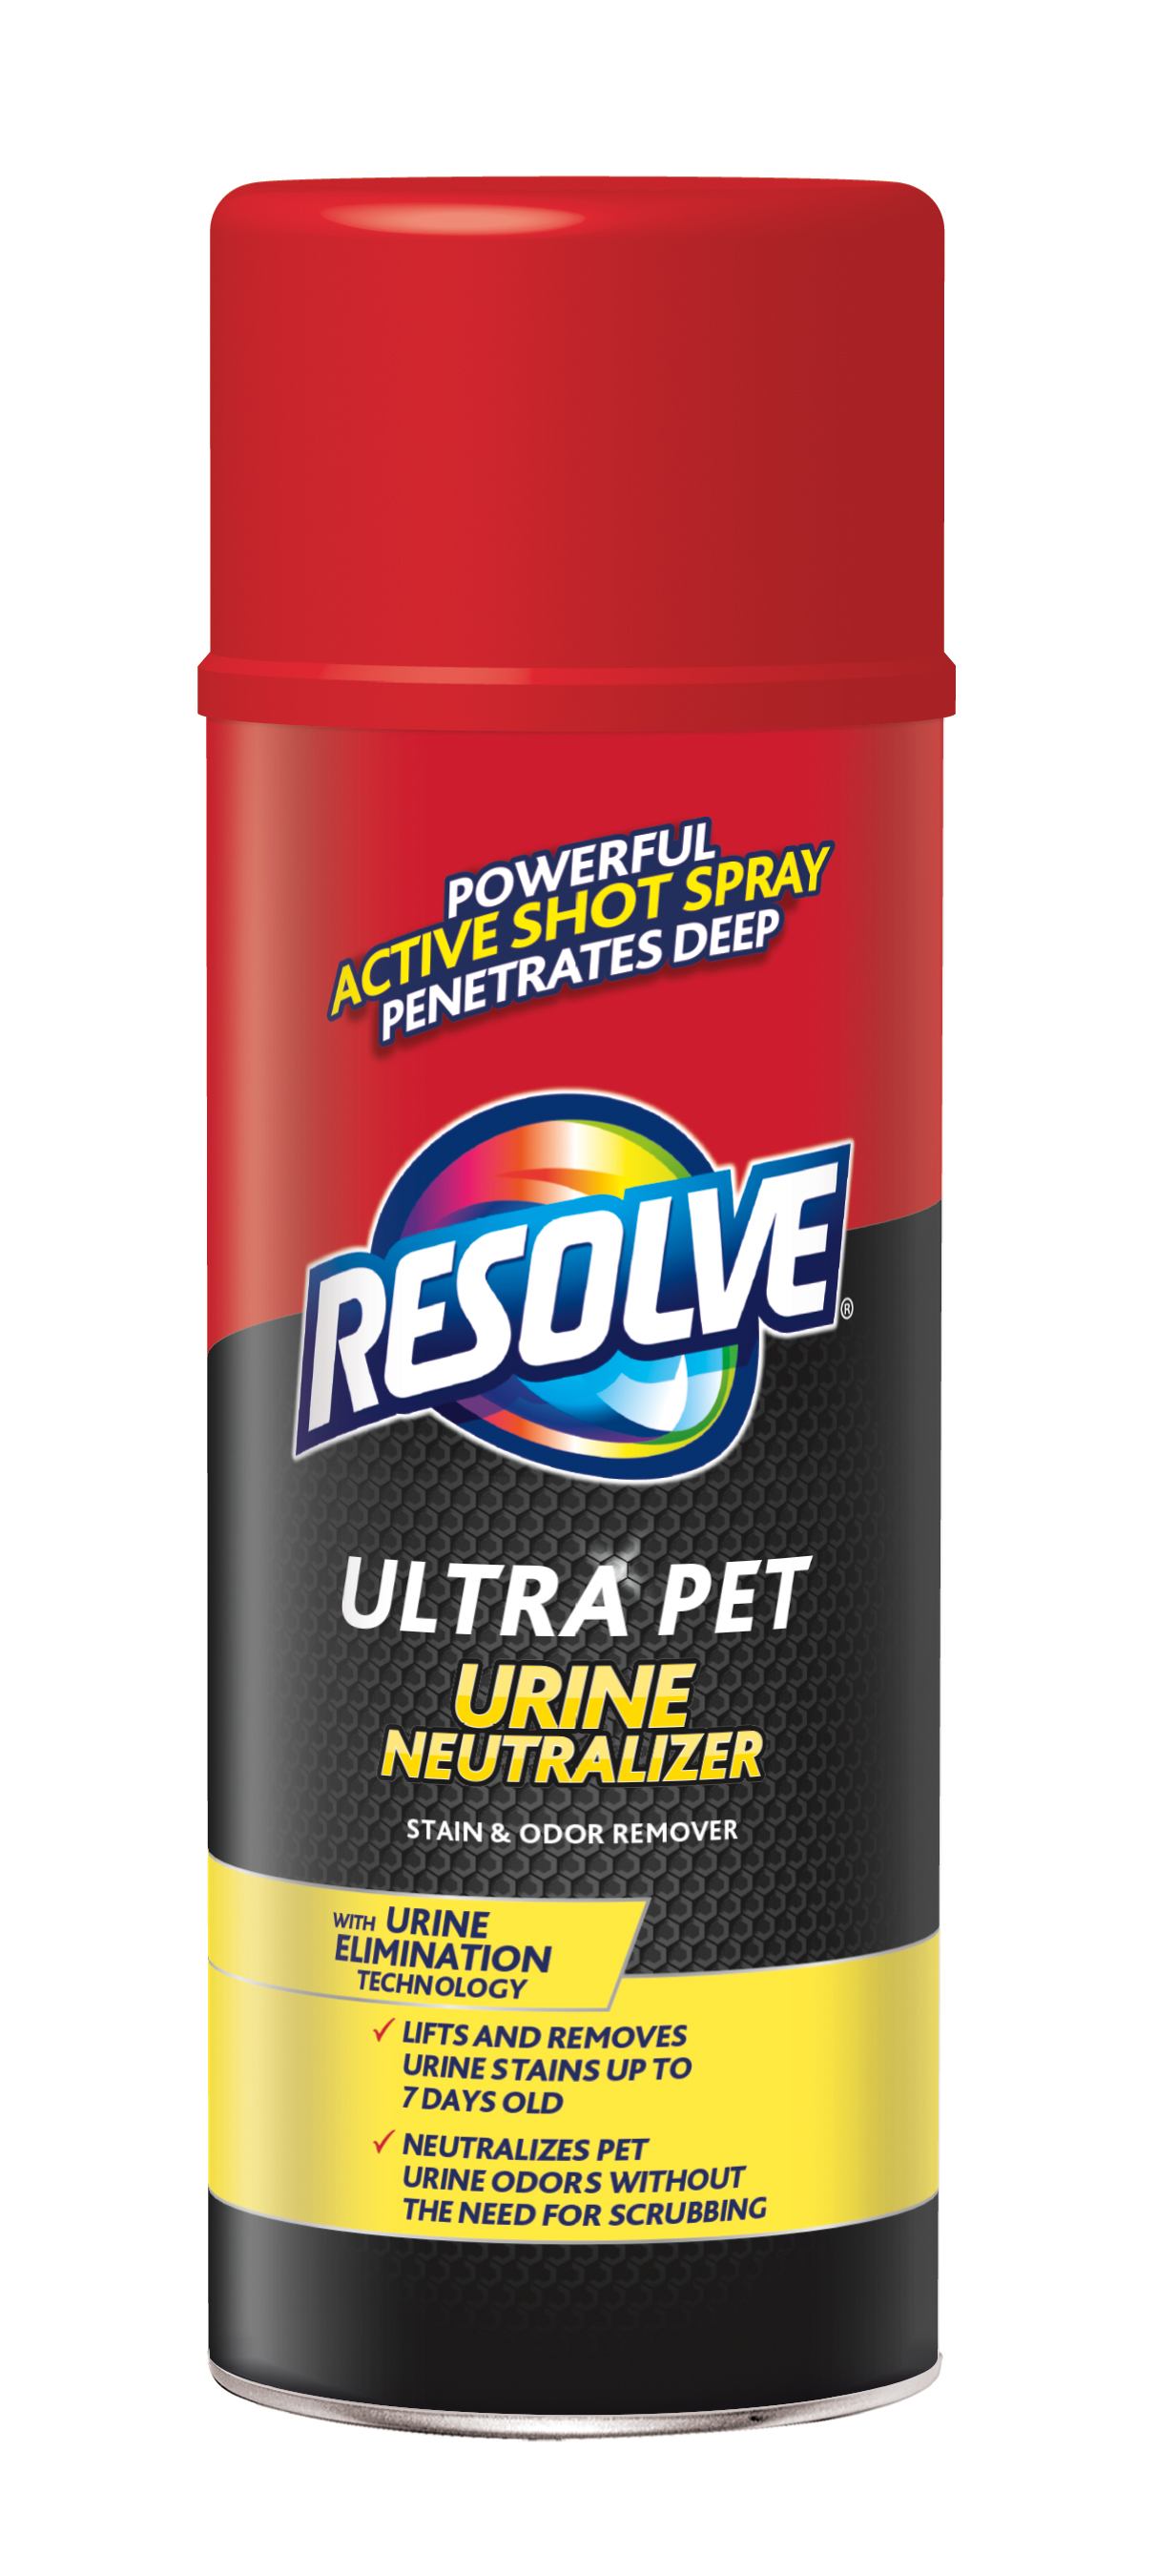 RESOLVE ULTRA PET Urine Neutralizer Stain  Odor Remover Aerosol